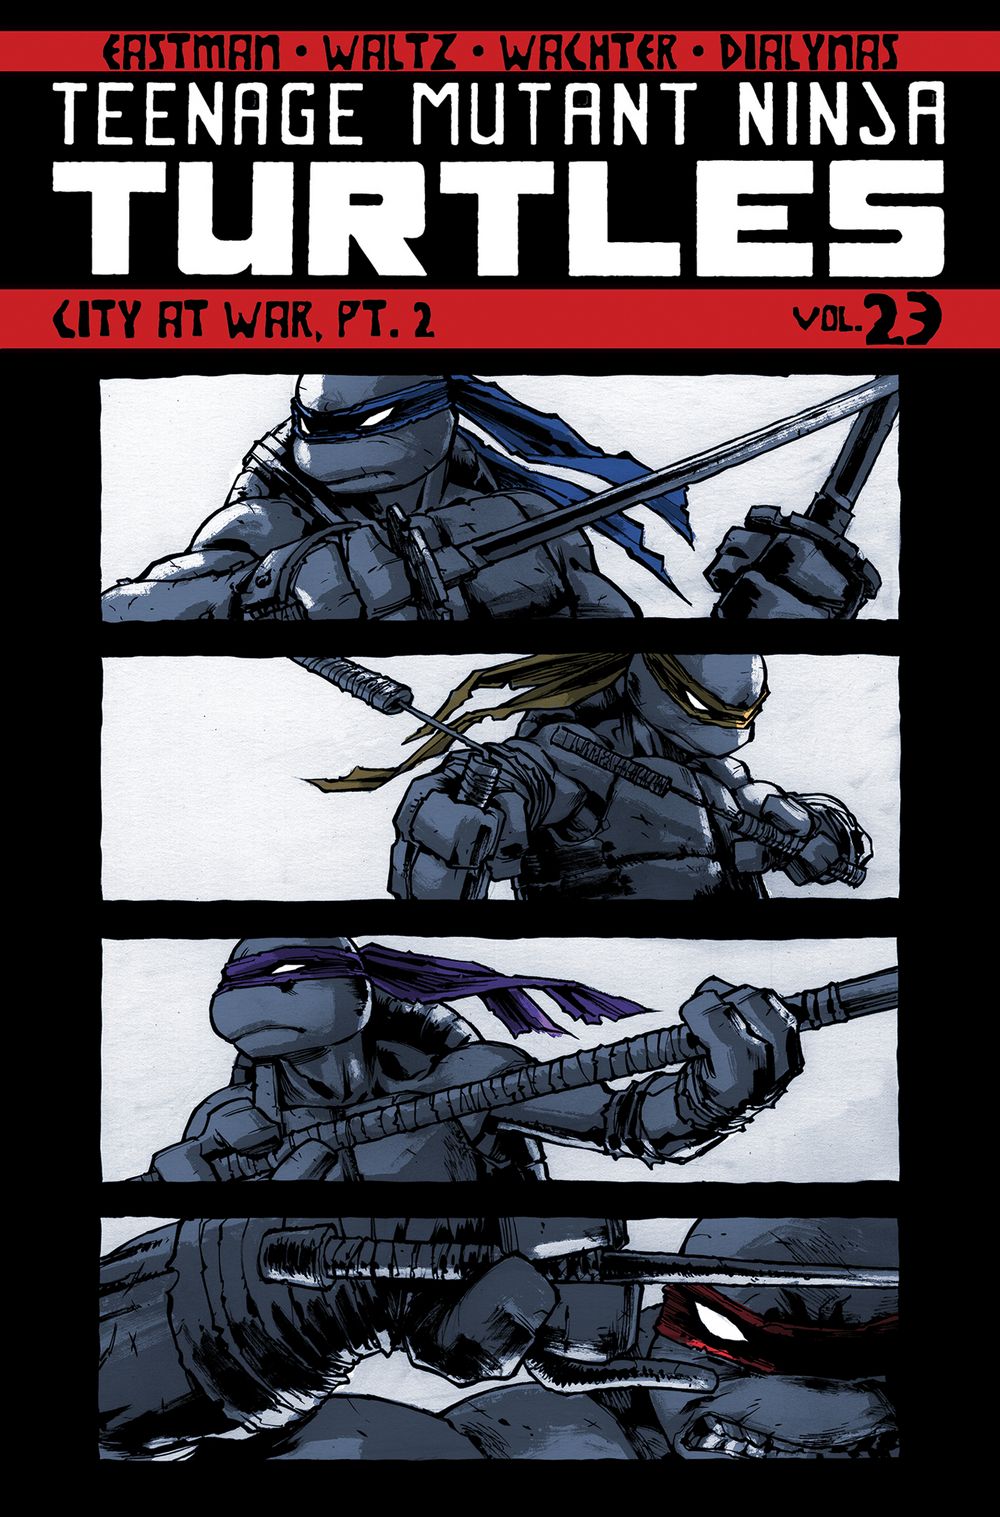 Teenage Mutant Ninja Turtles Ongoing TP VOL 23 City At War Pt 2